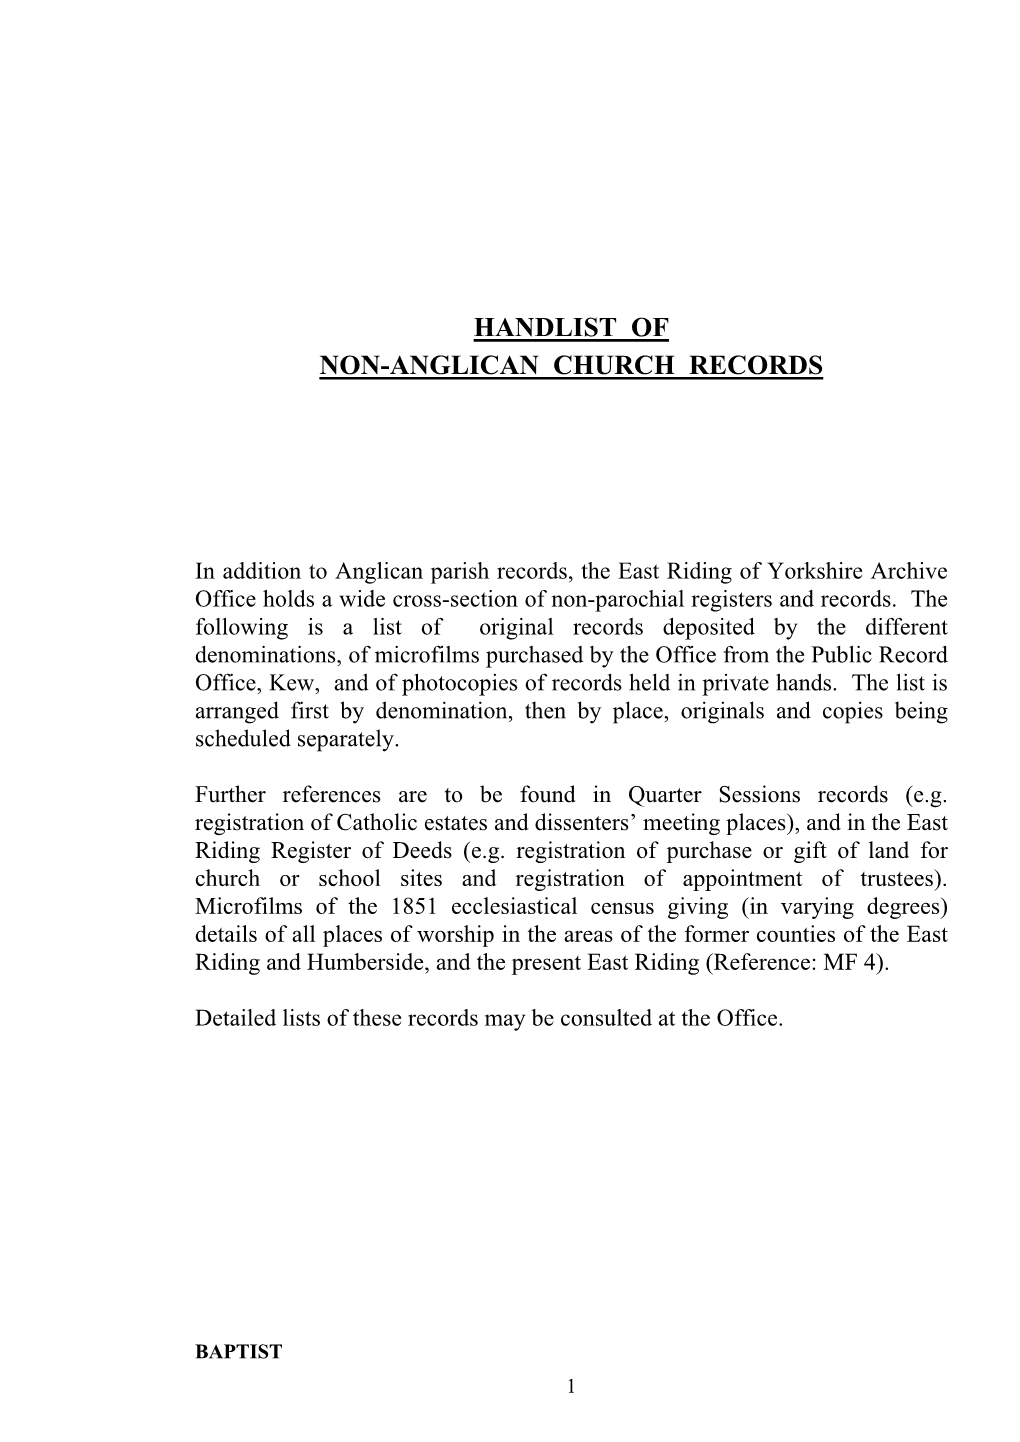 Handlist of Non-Anglican Church Records